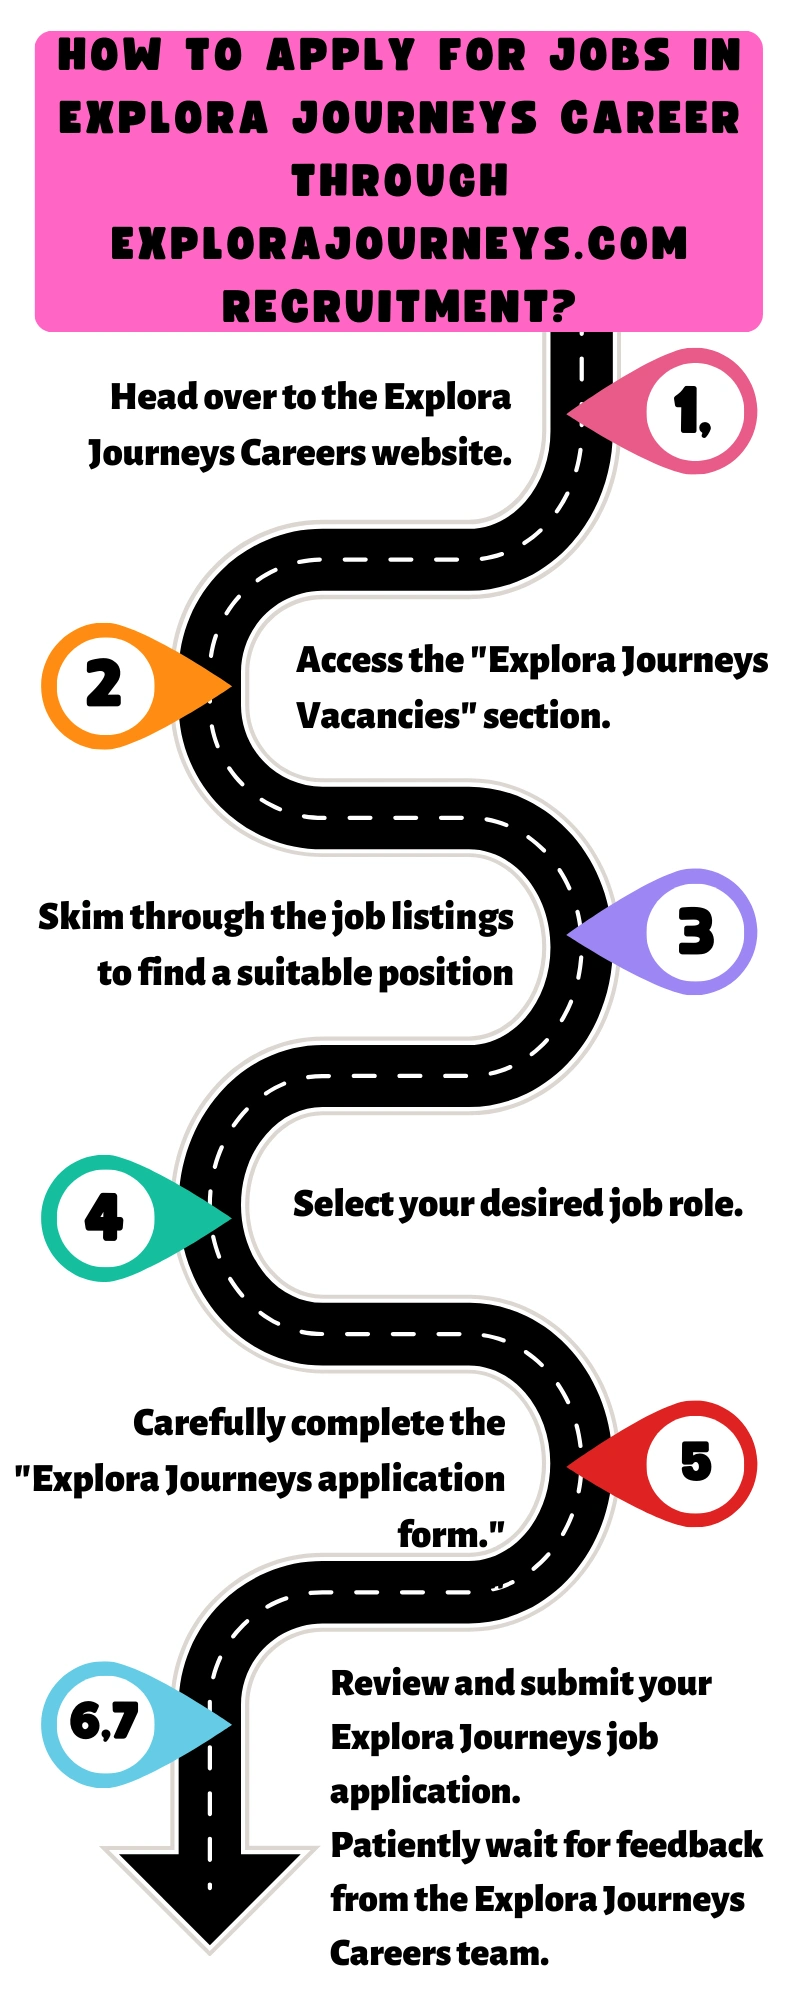 How to Apply for Jobs in Explora Journeys Career through explorajourneys.com recruitment?